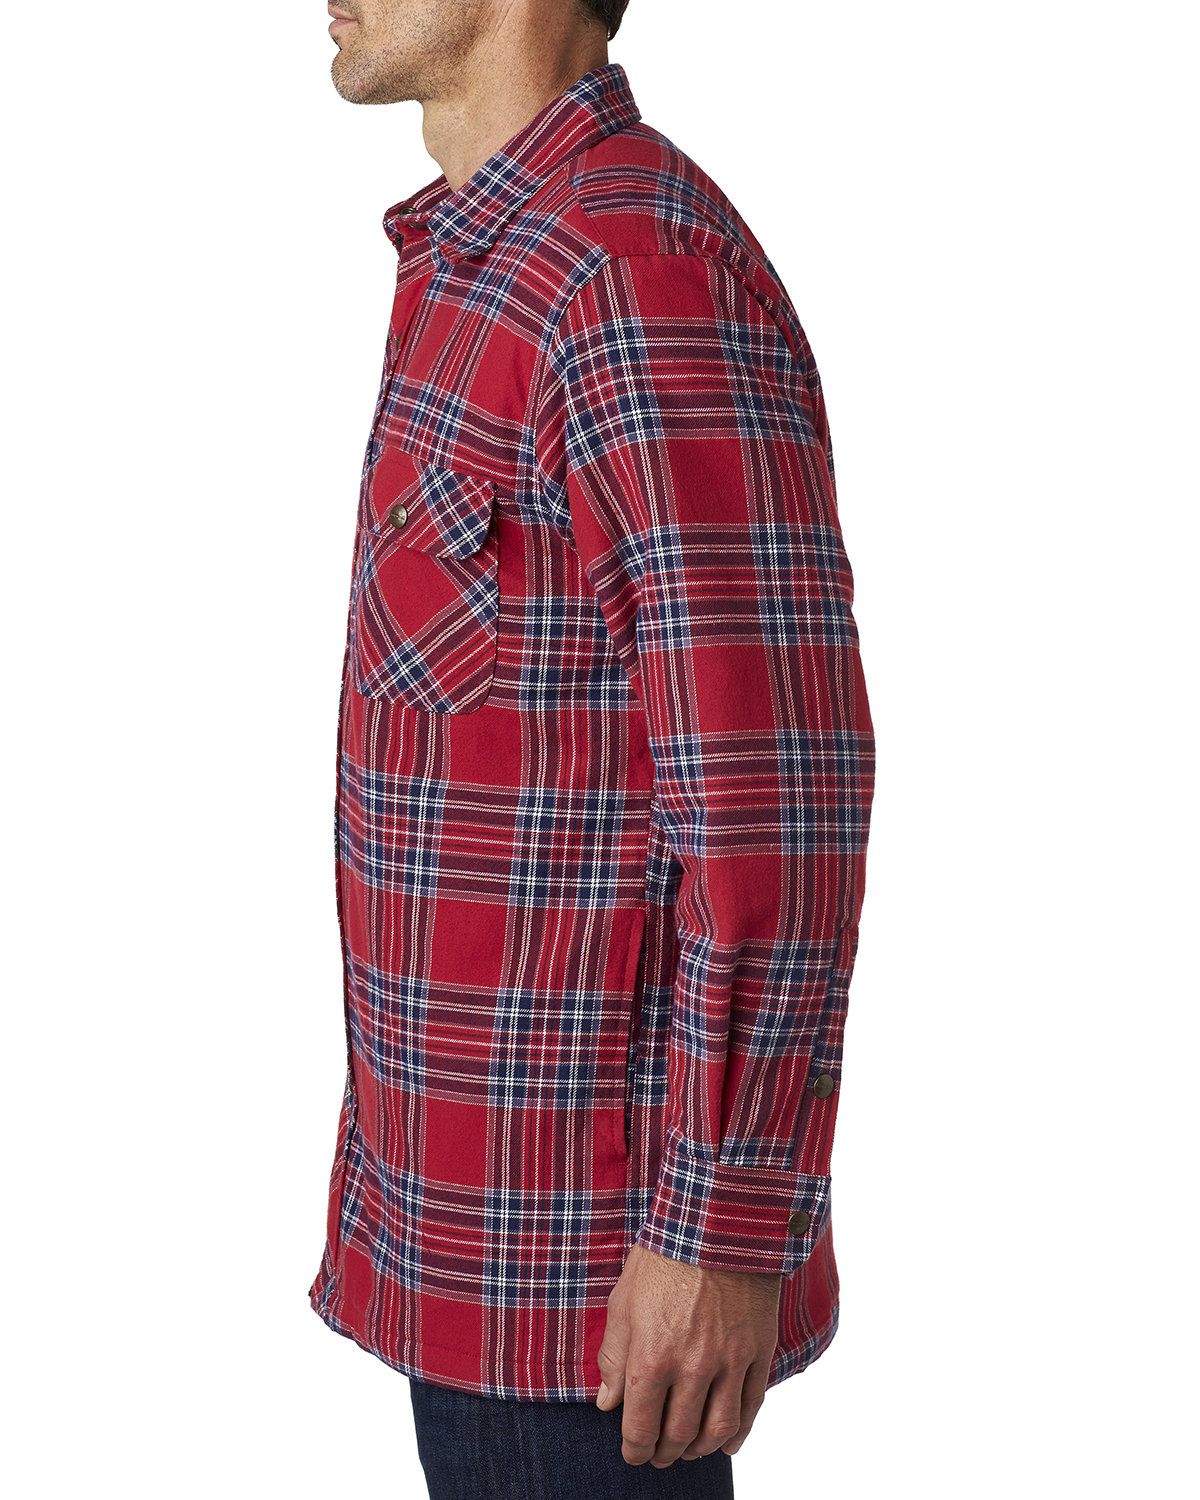 Backpacker BP7002 Men's Flannel Shirt Jacket | Veetrends